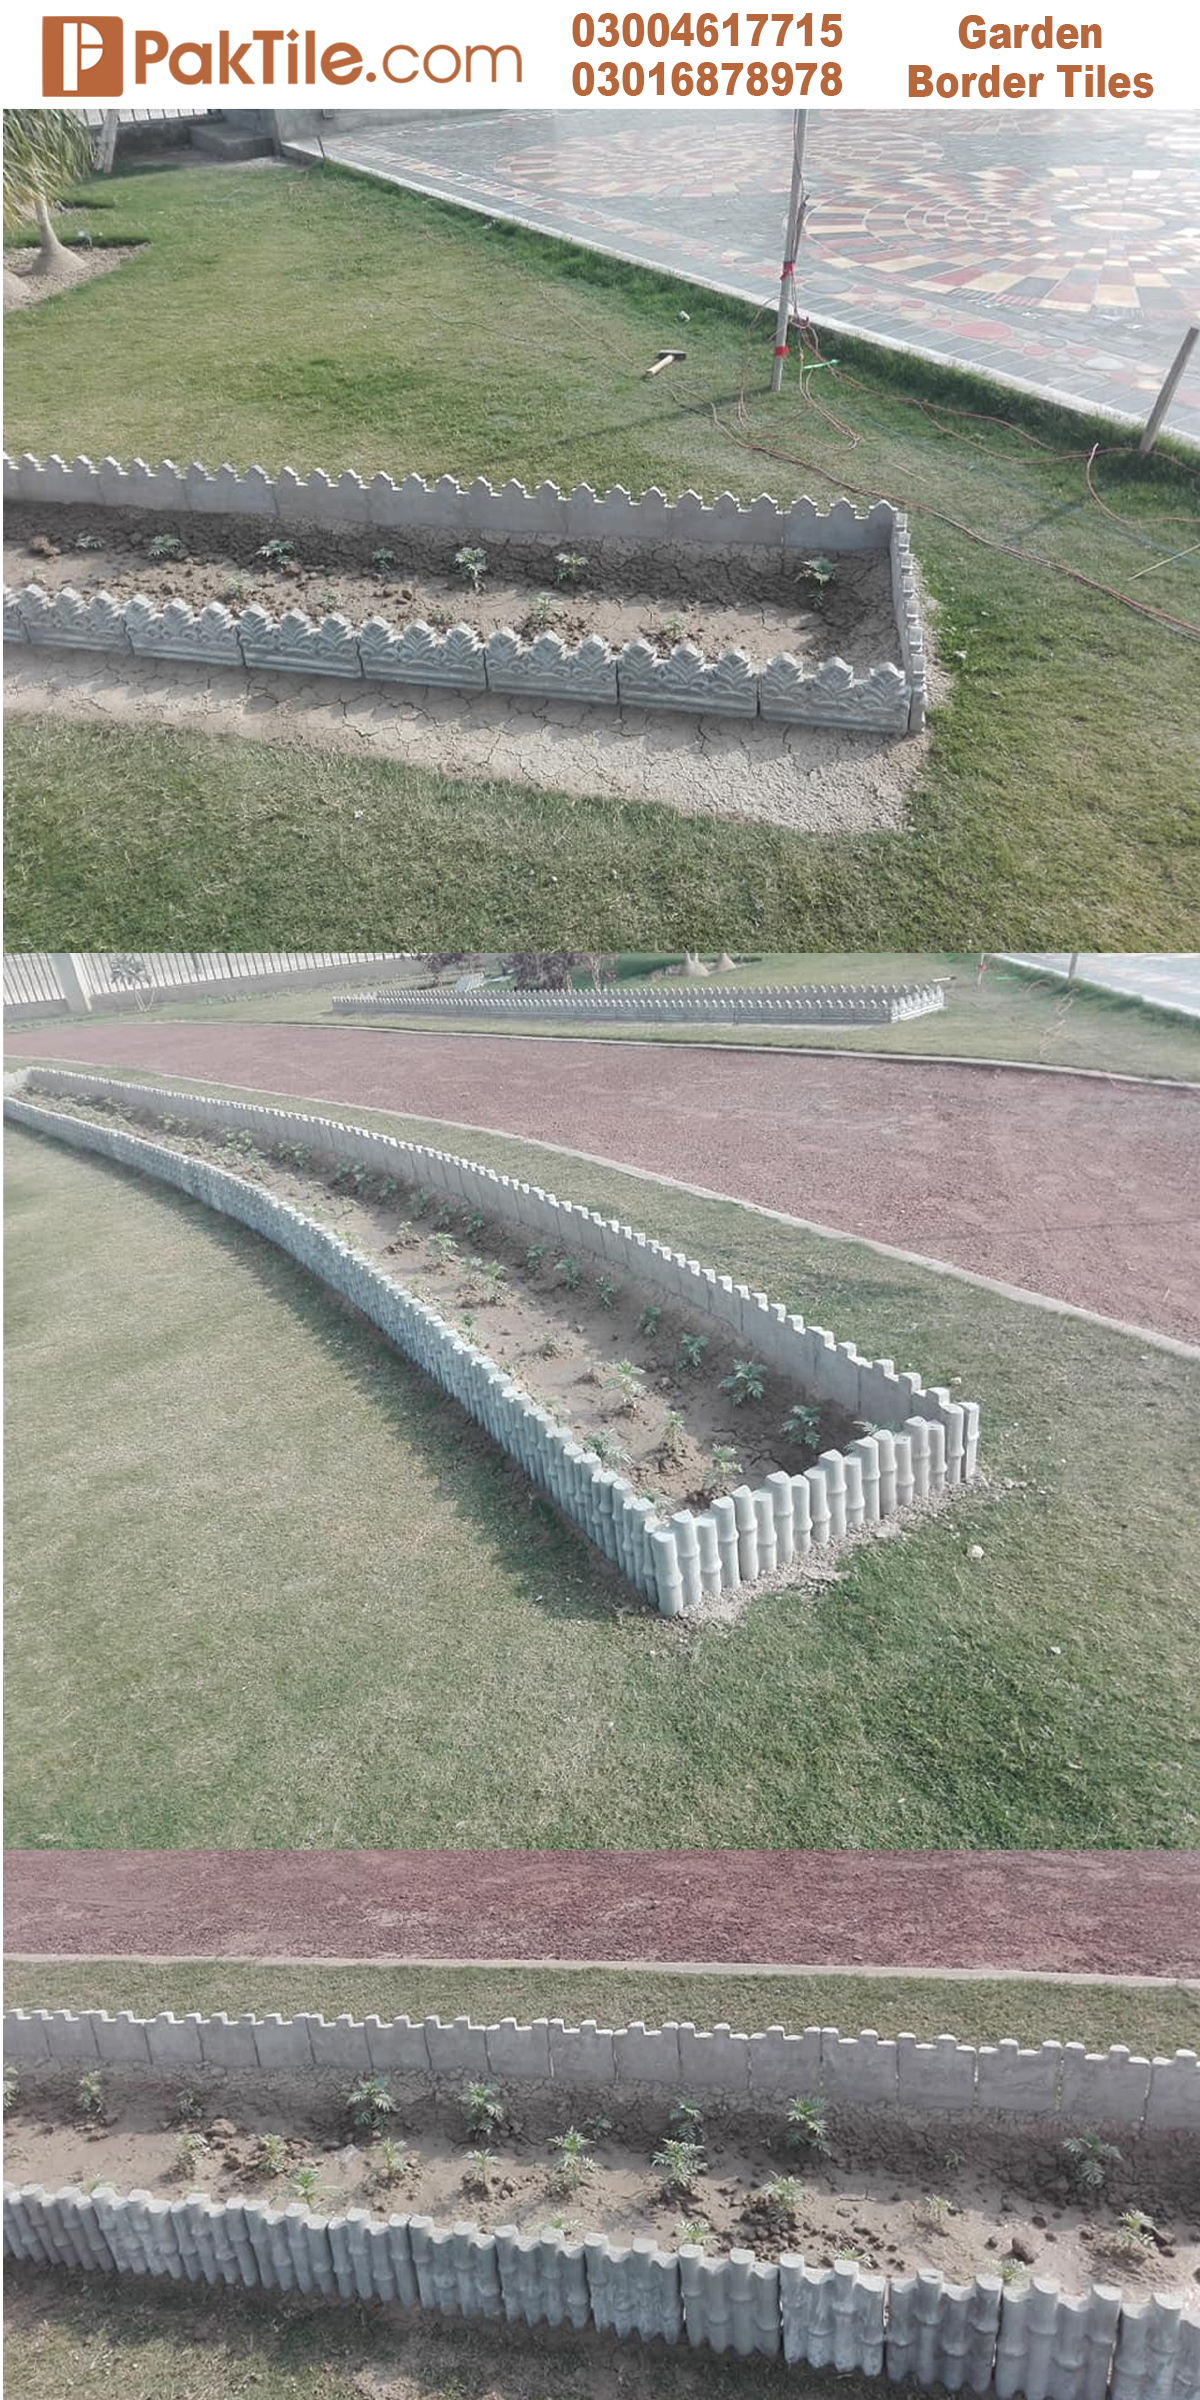 Pak Clay Garden Border Tiles in Pakistan